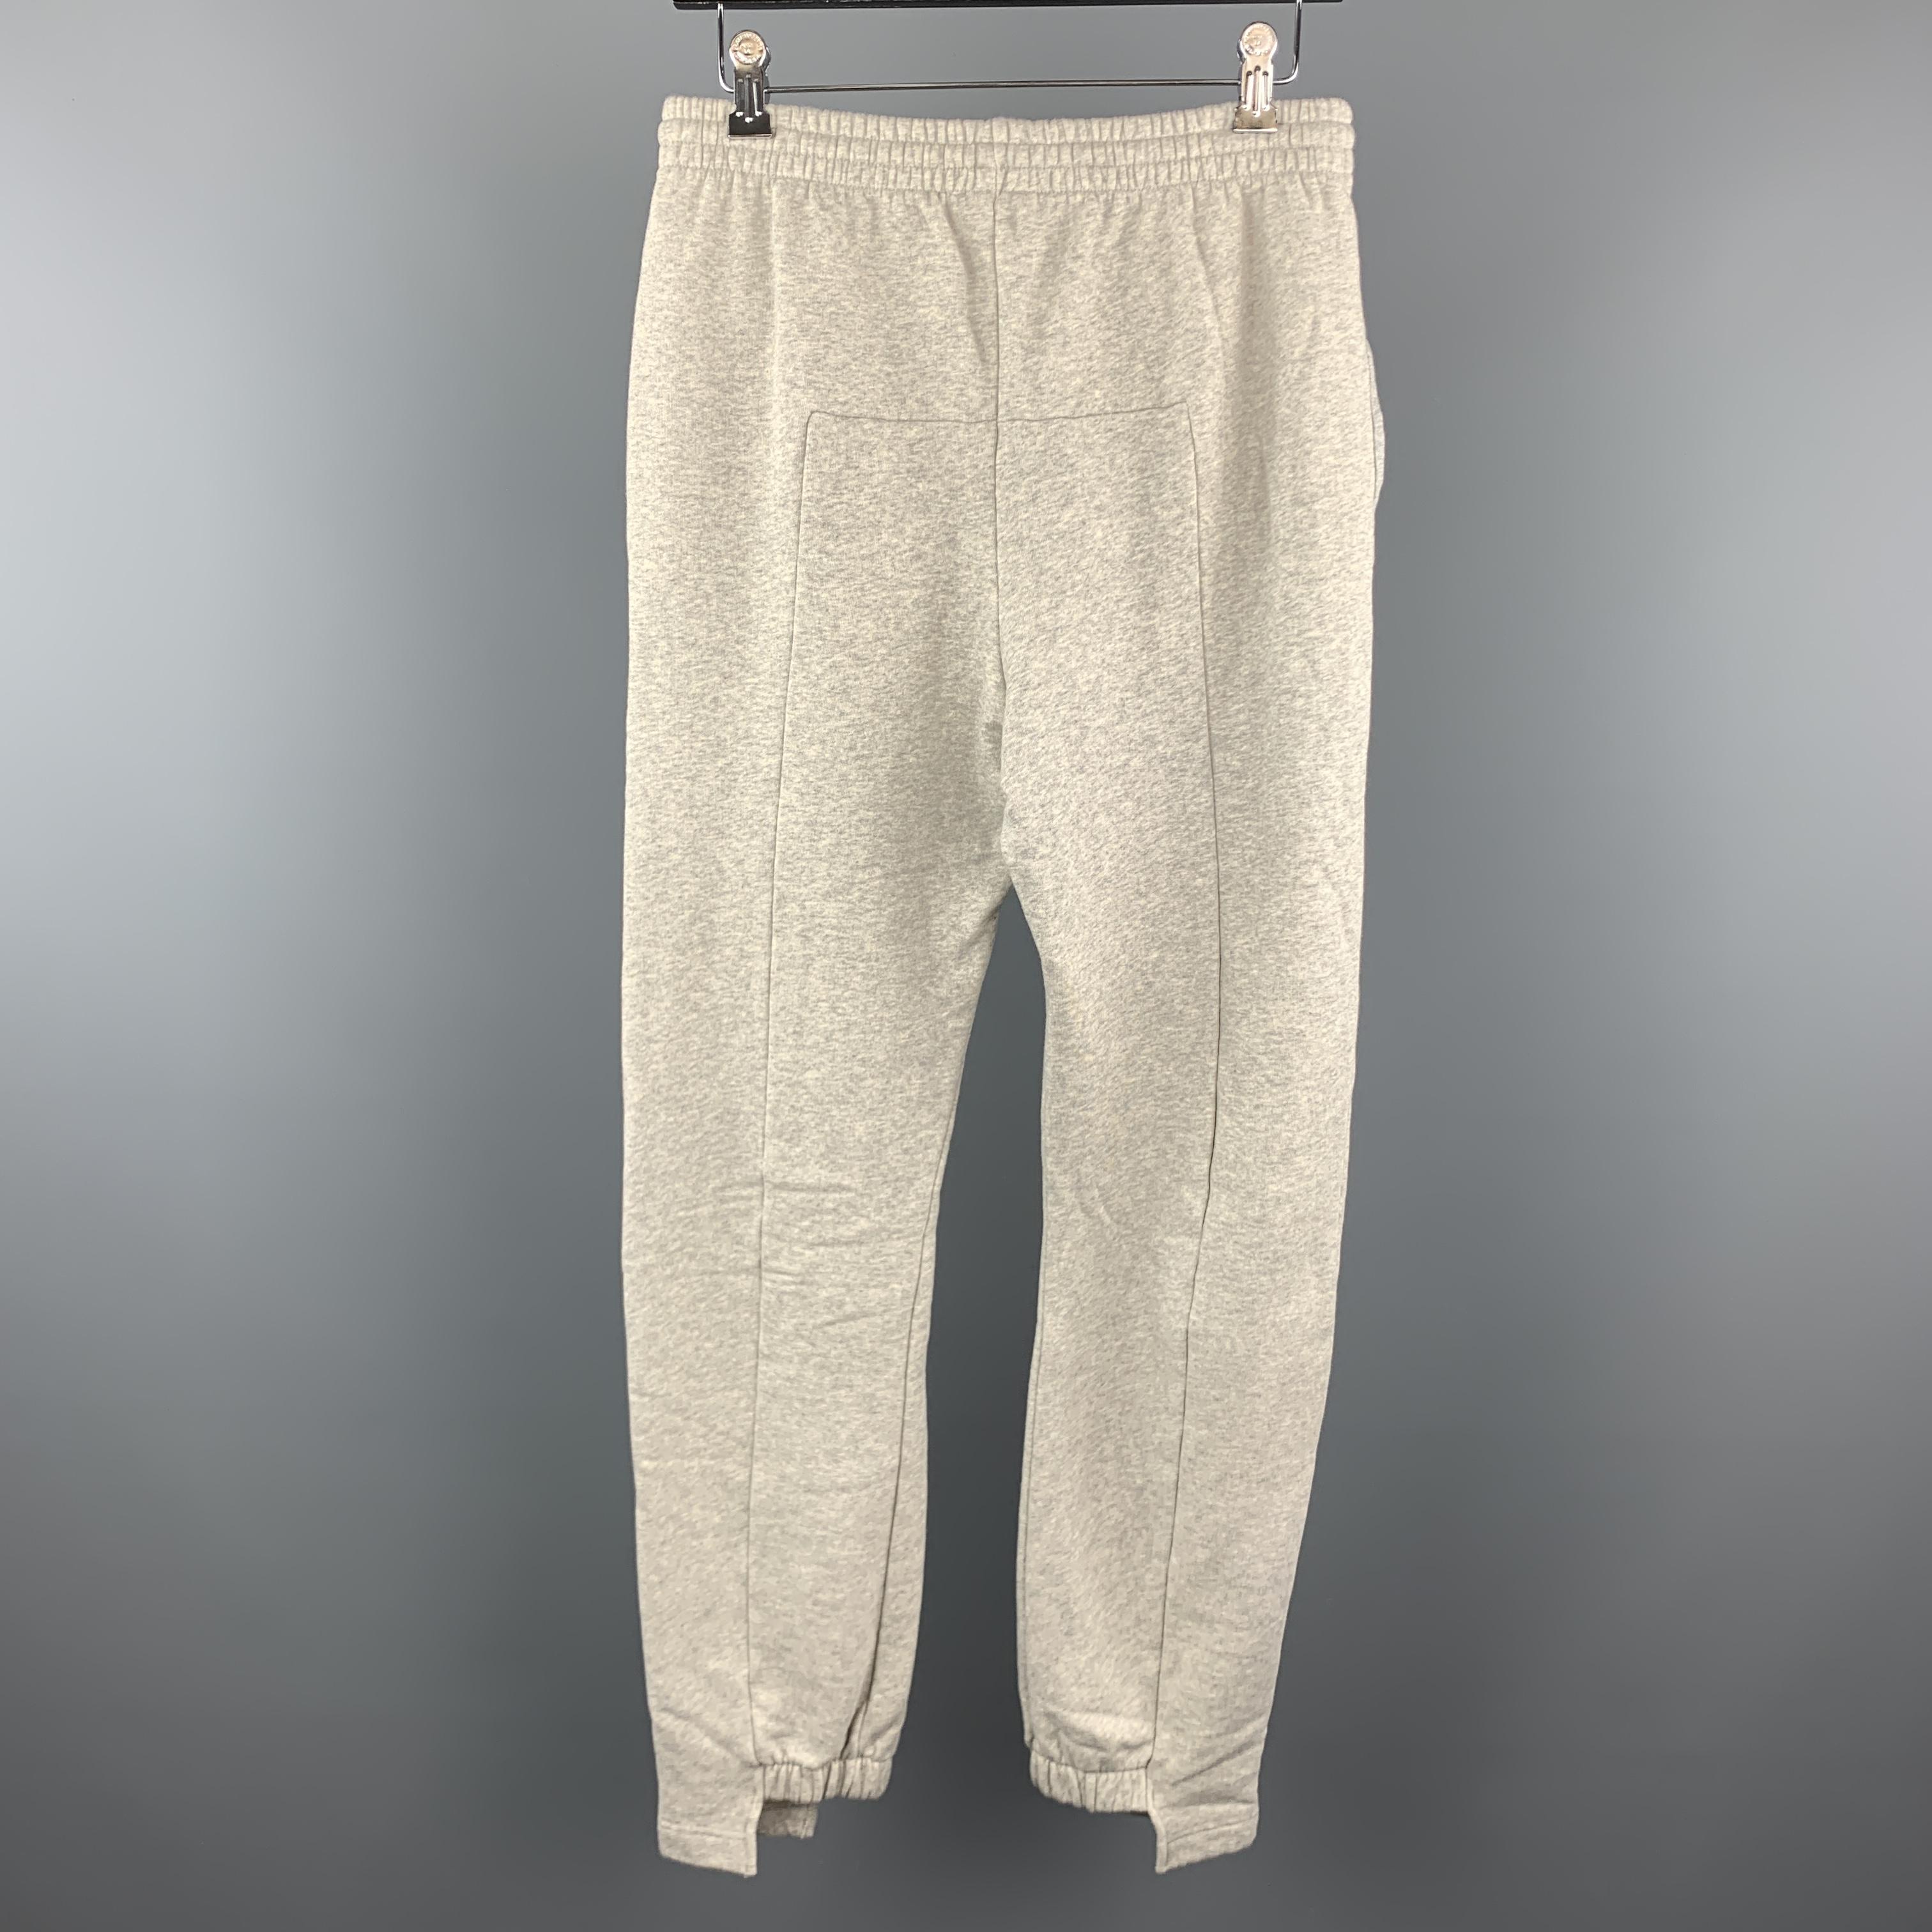 light gray sweatpants